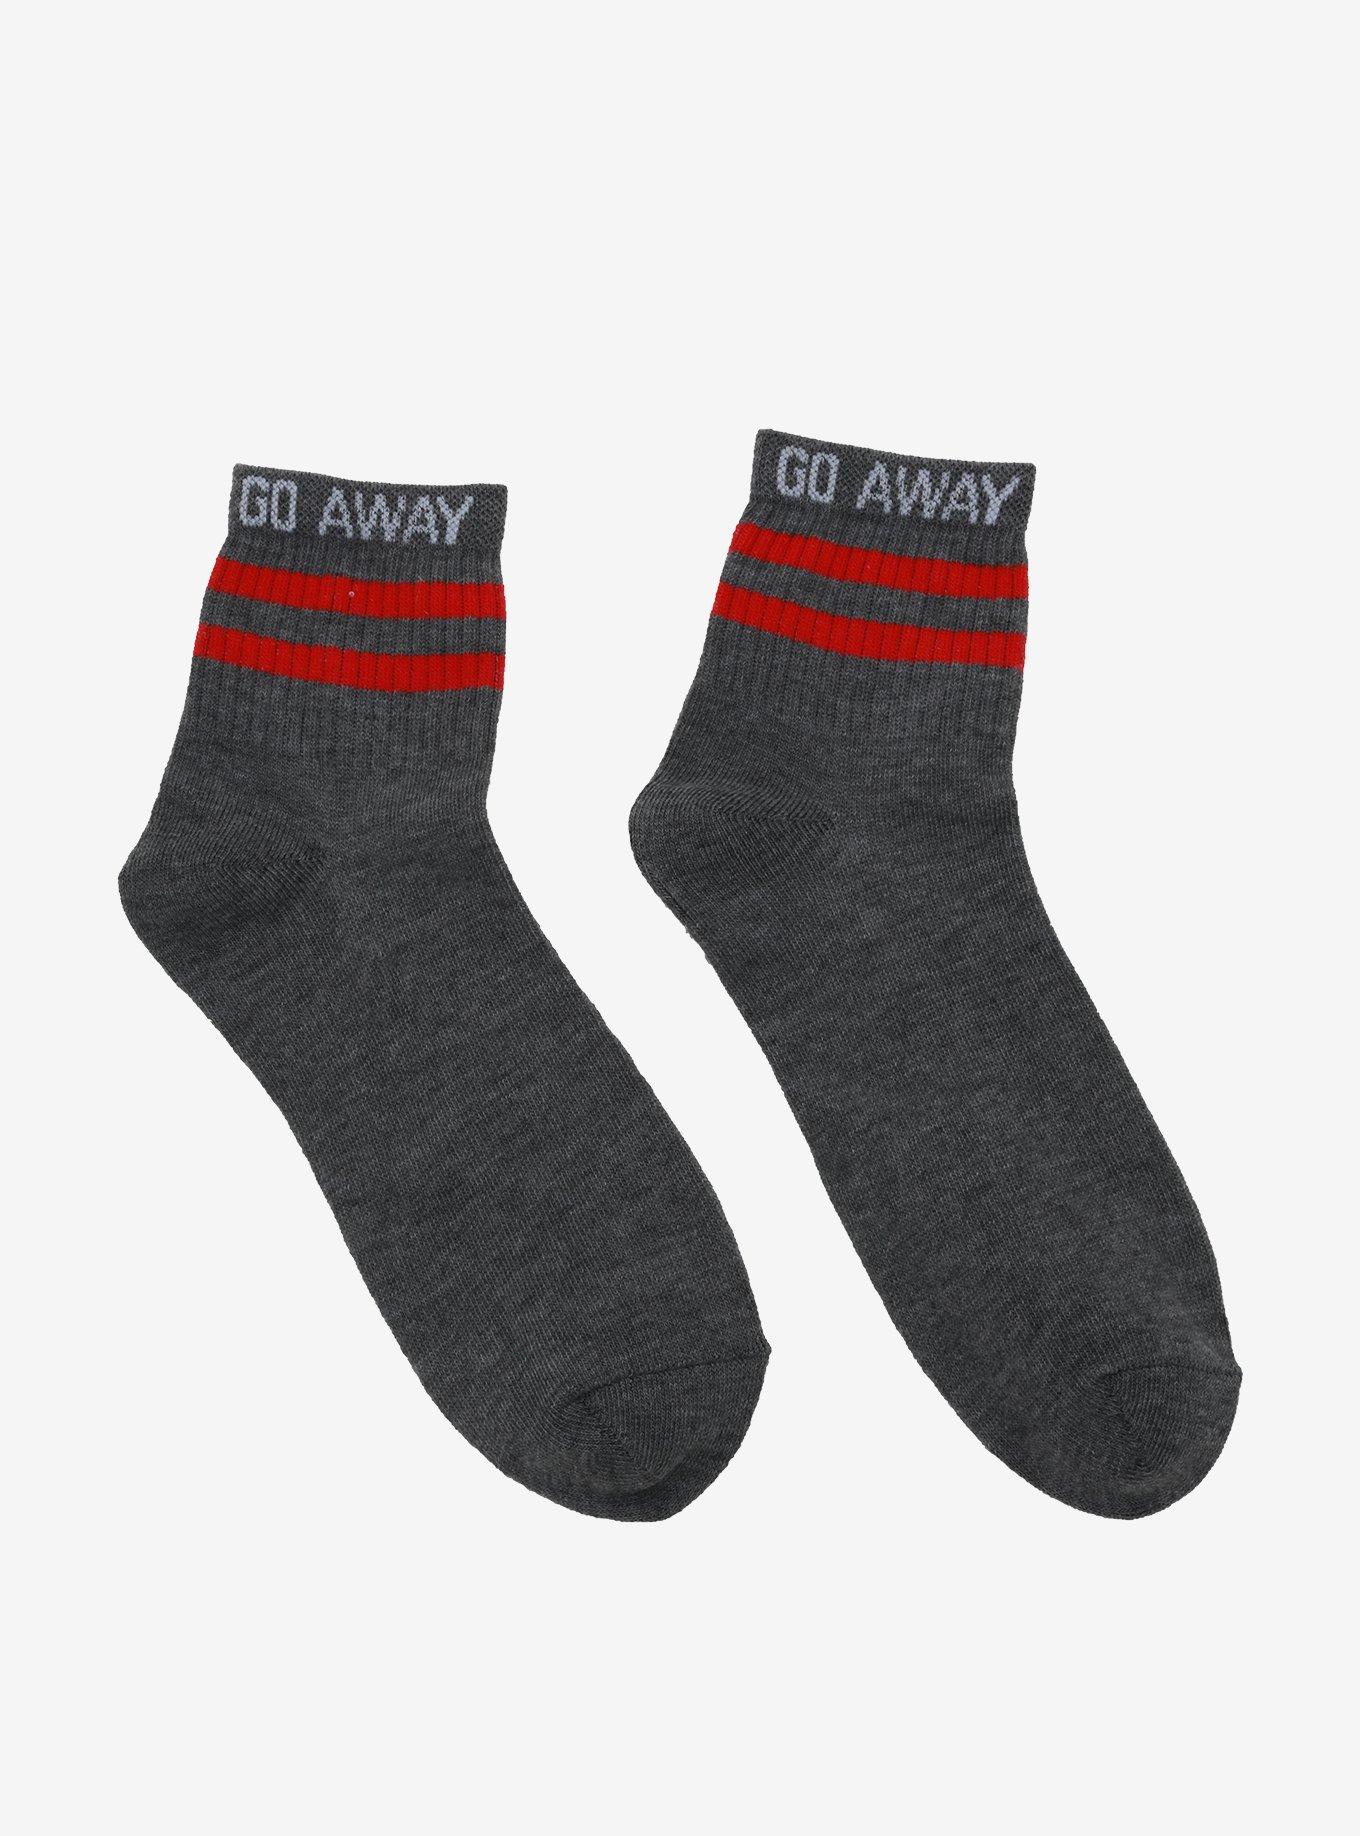 Go Away Grey & Red Ankle Socks, , hi-res